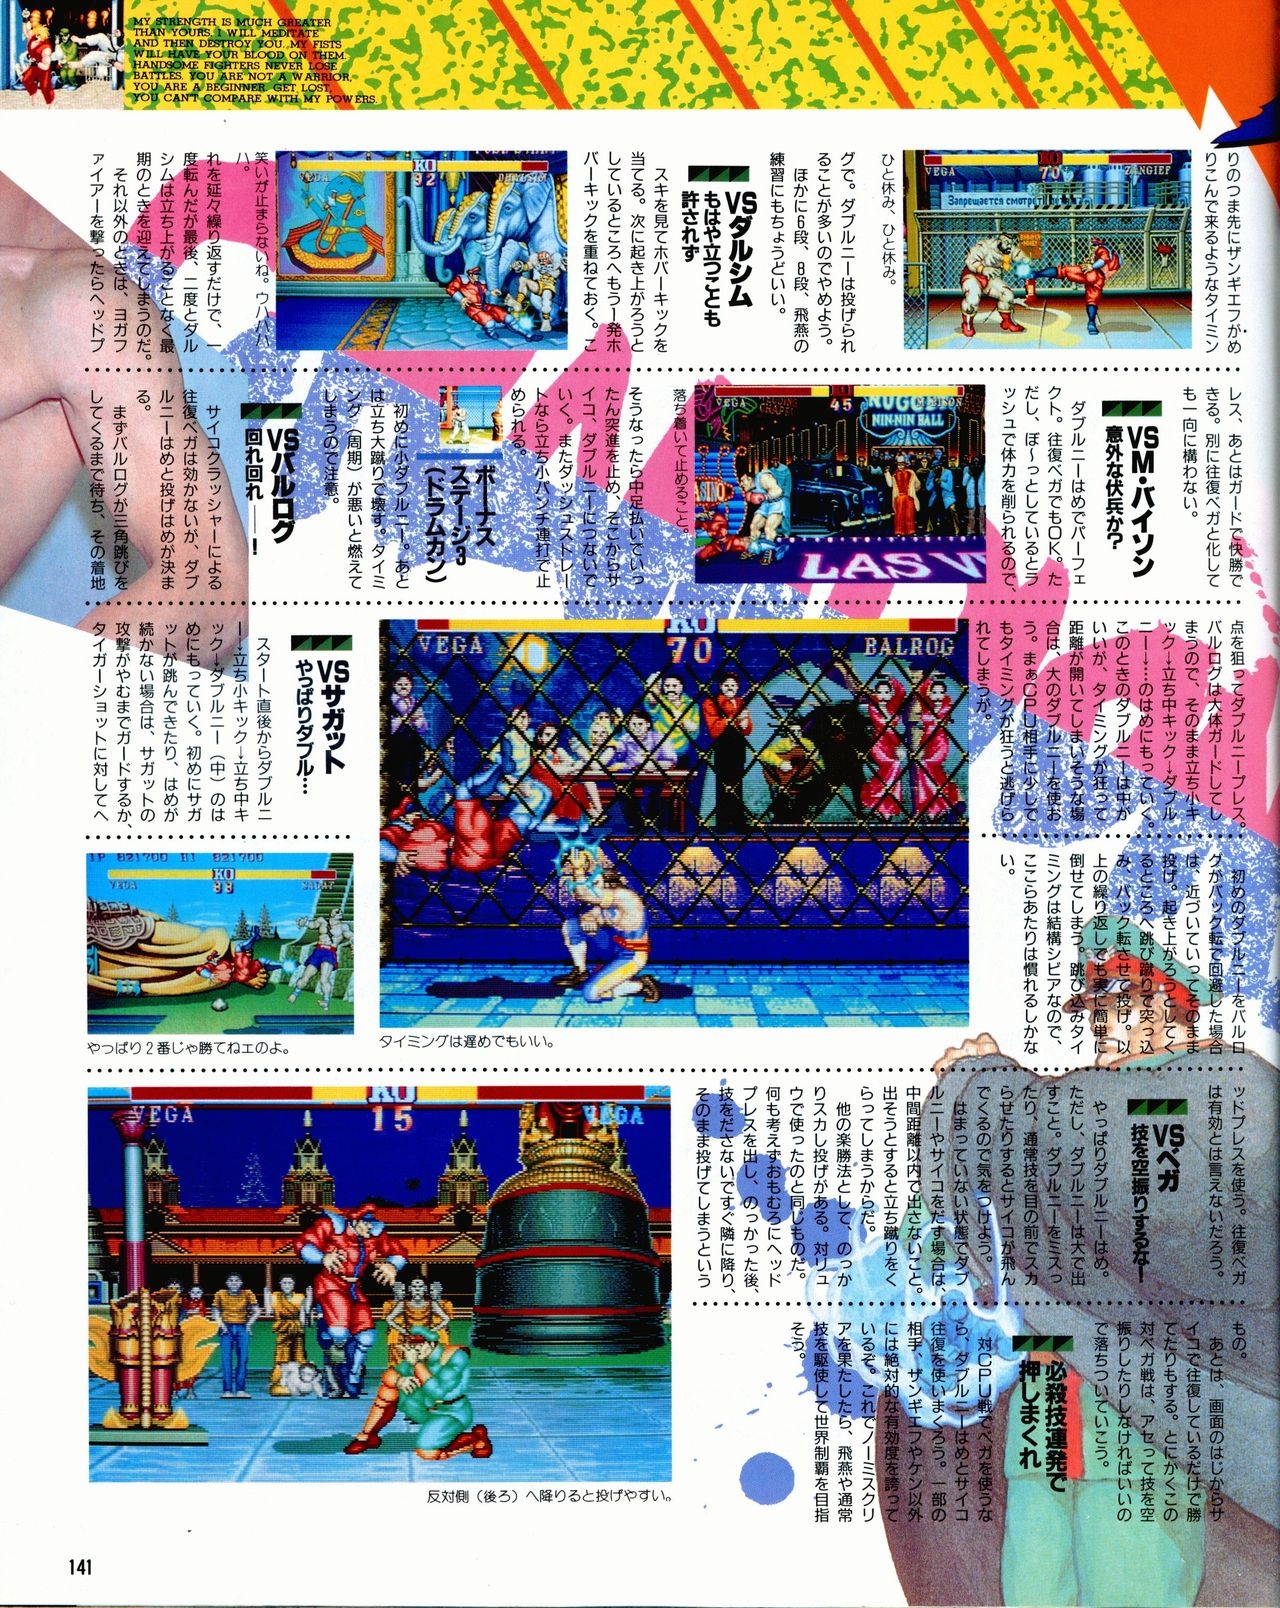 Street Fighter II Dash - Gamest special issue 77 142